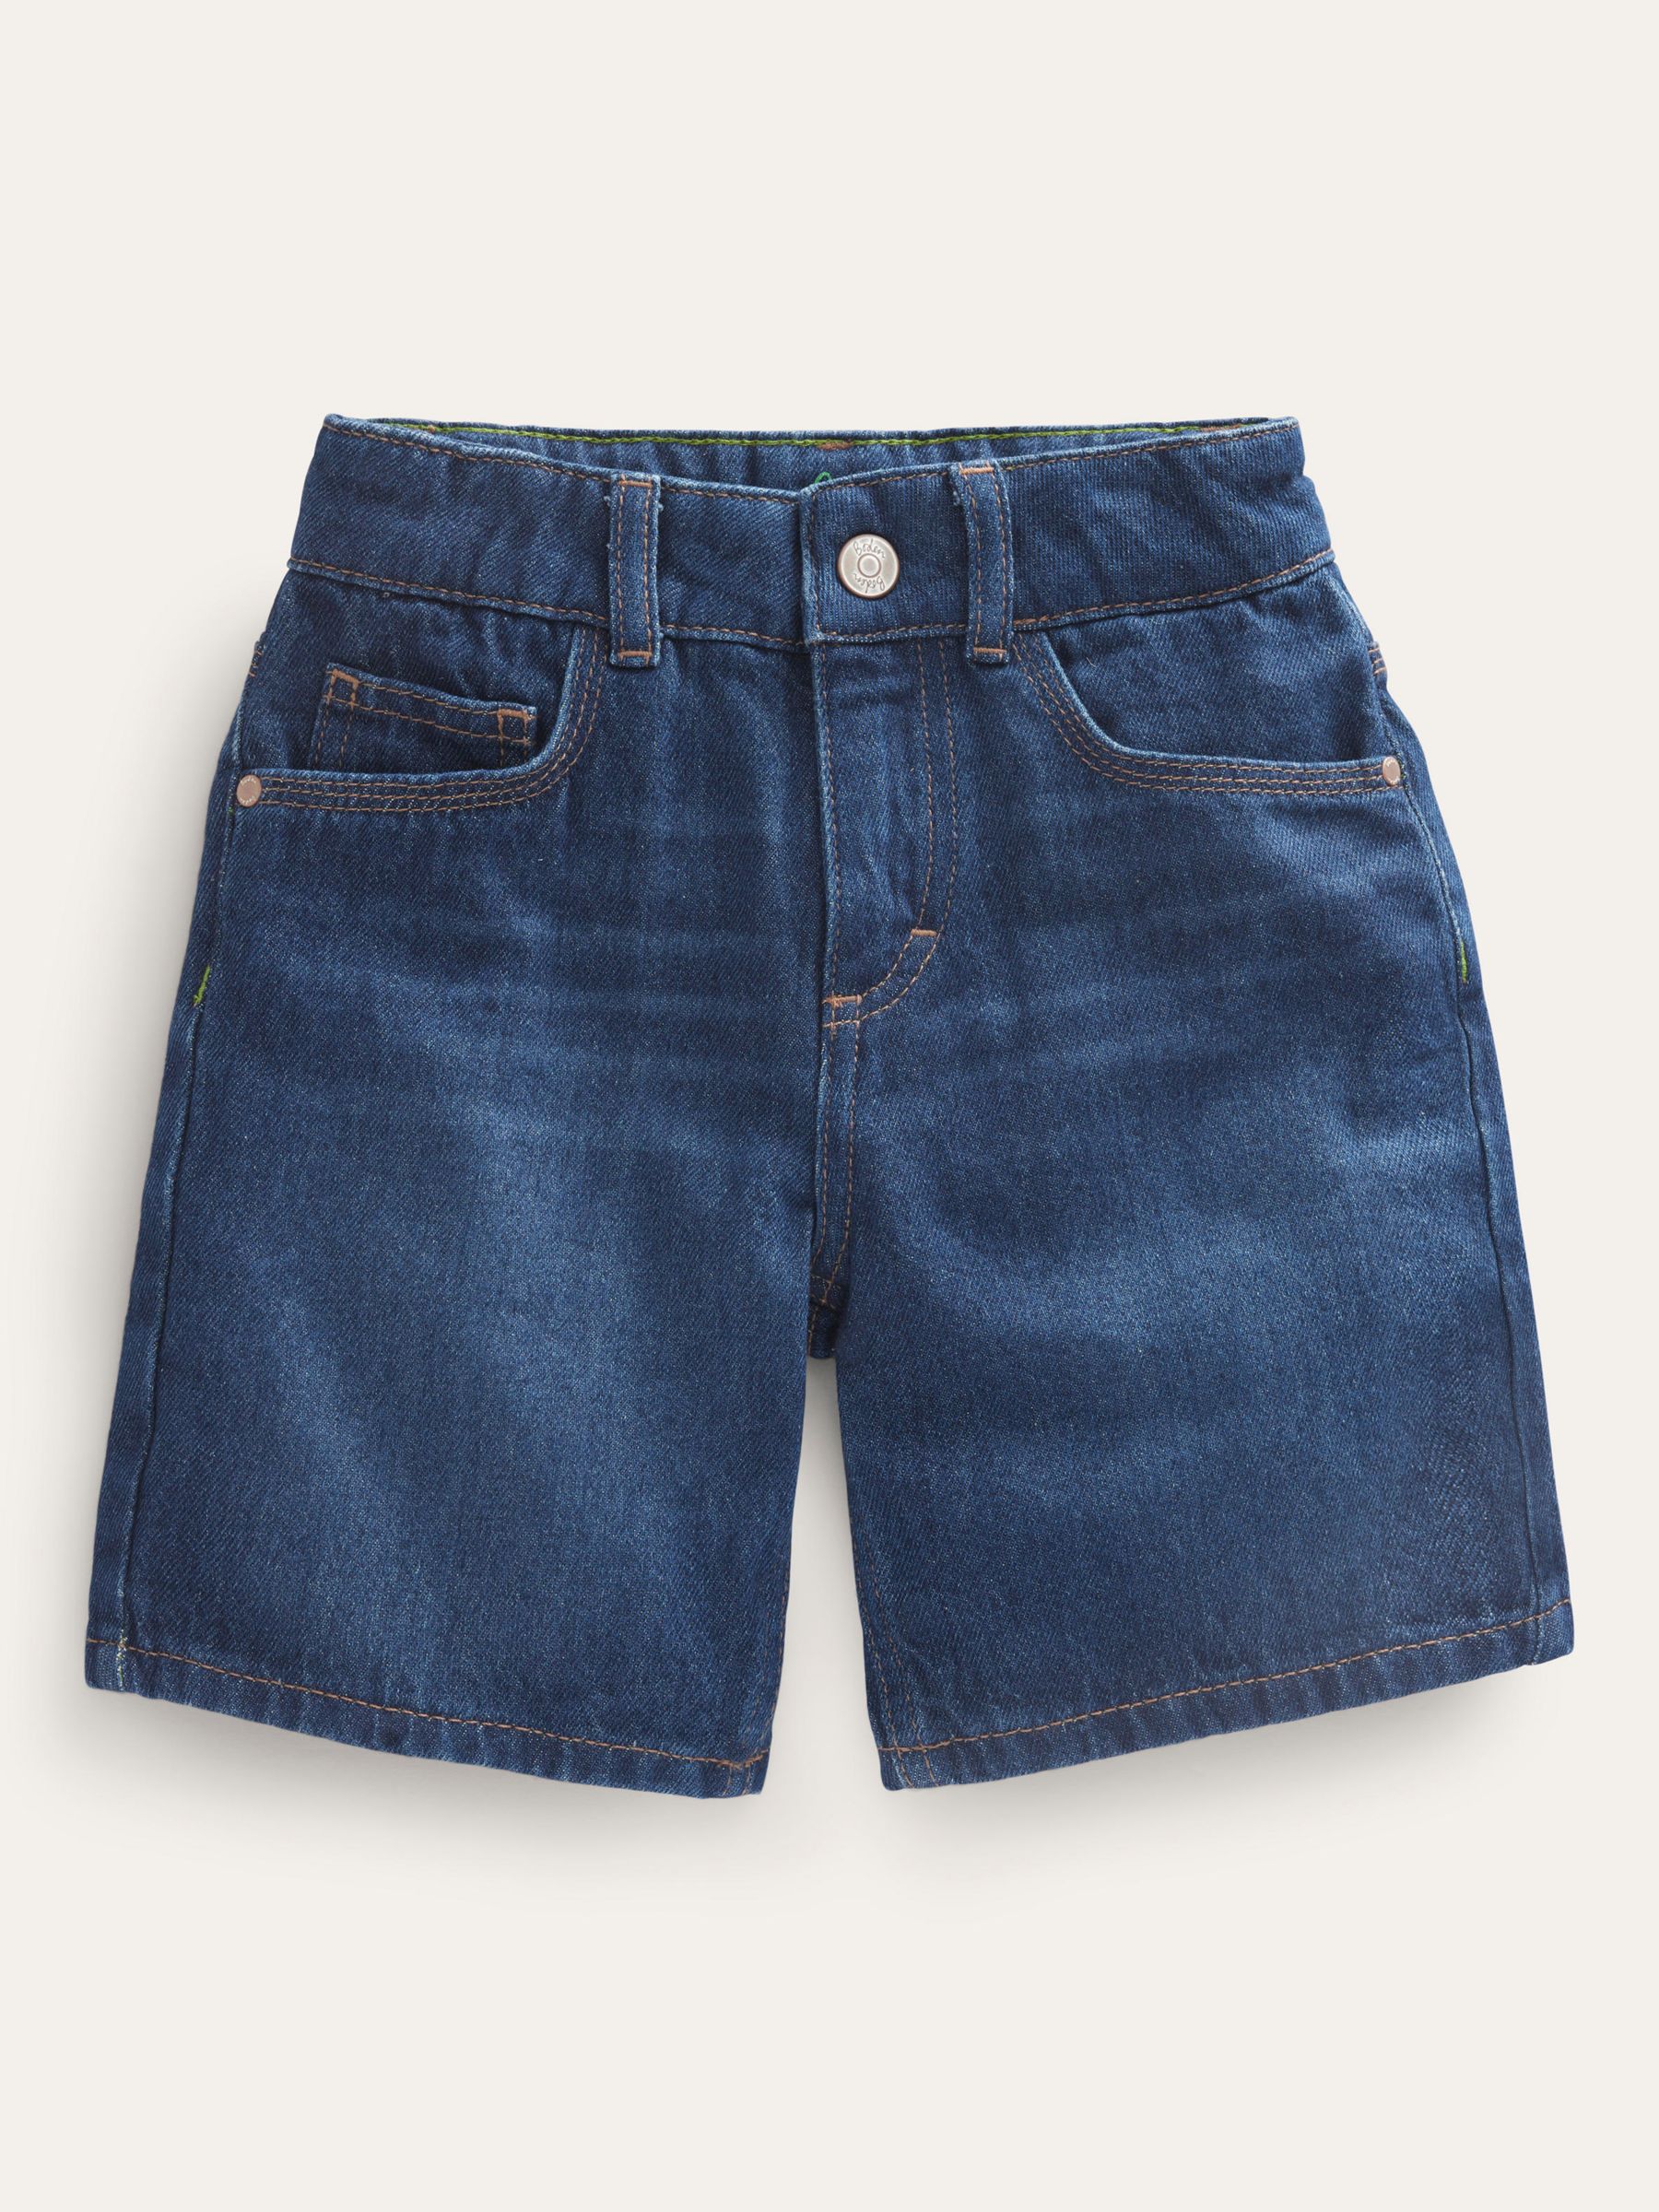 Mini Boden Boy's Relaxed Fit Denim Shorts, Dark Vintage